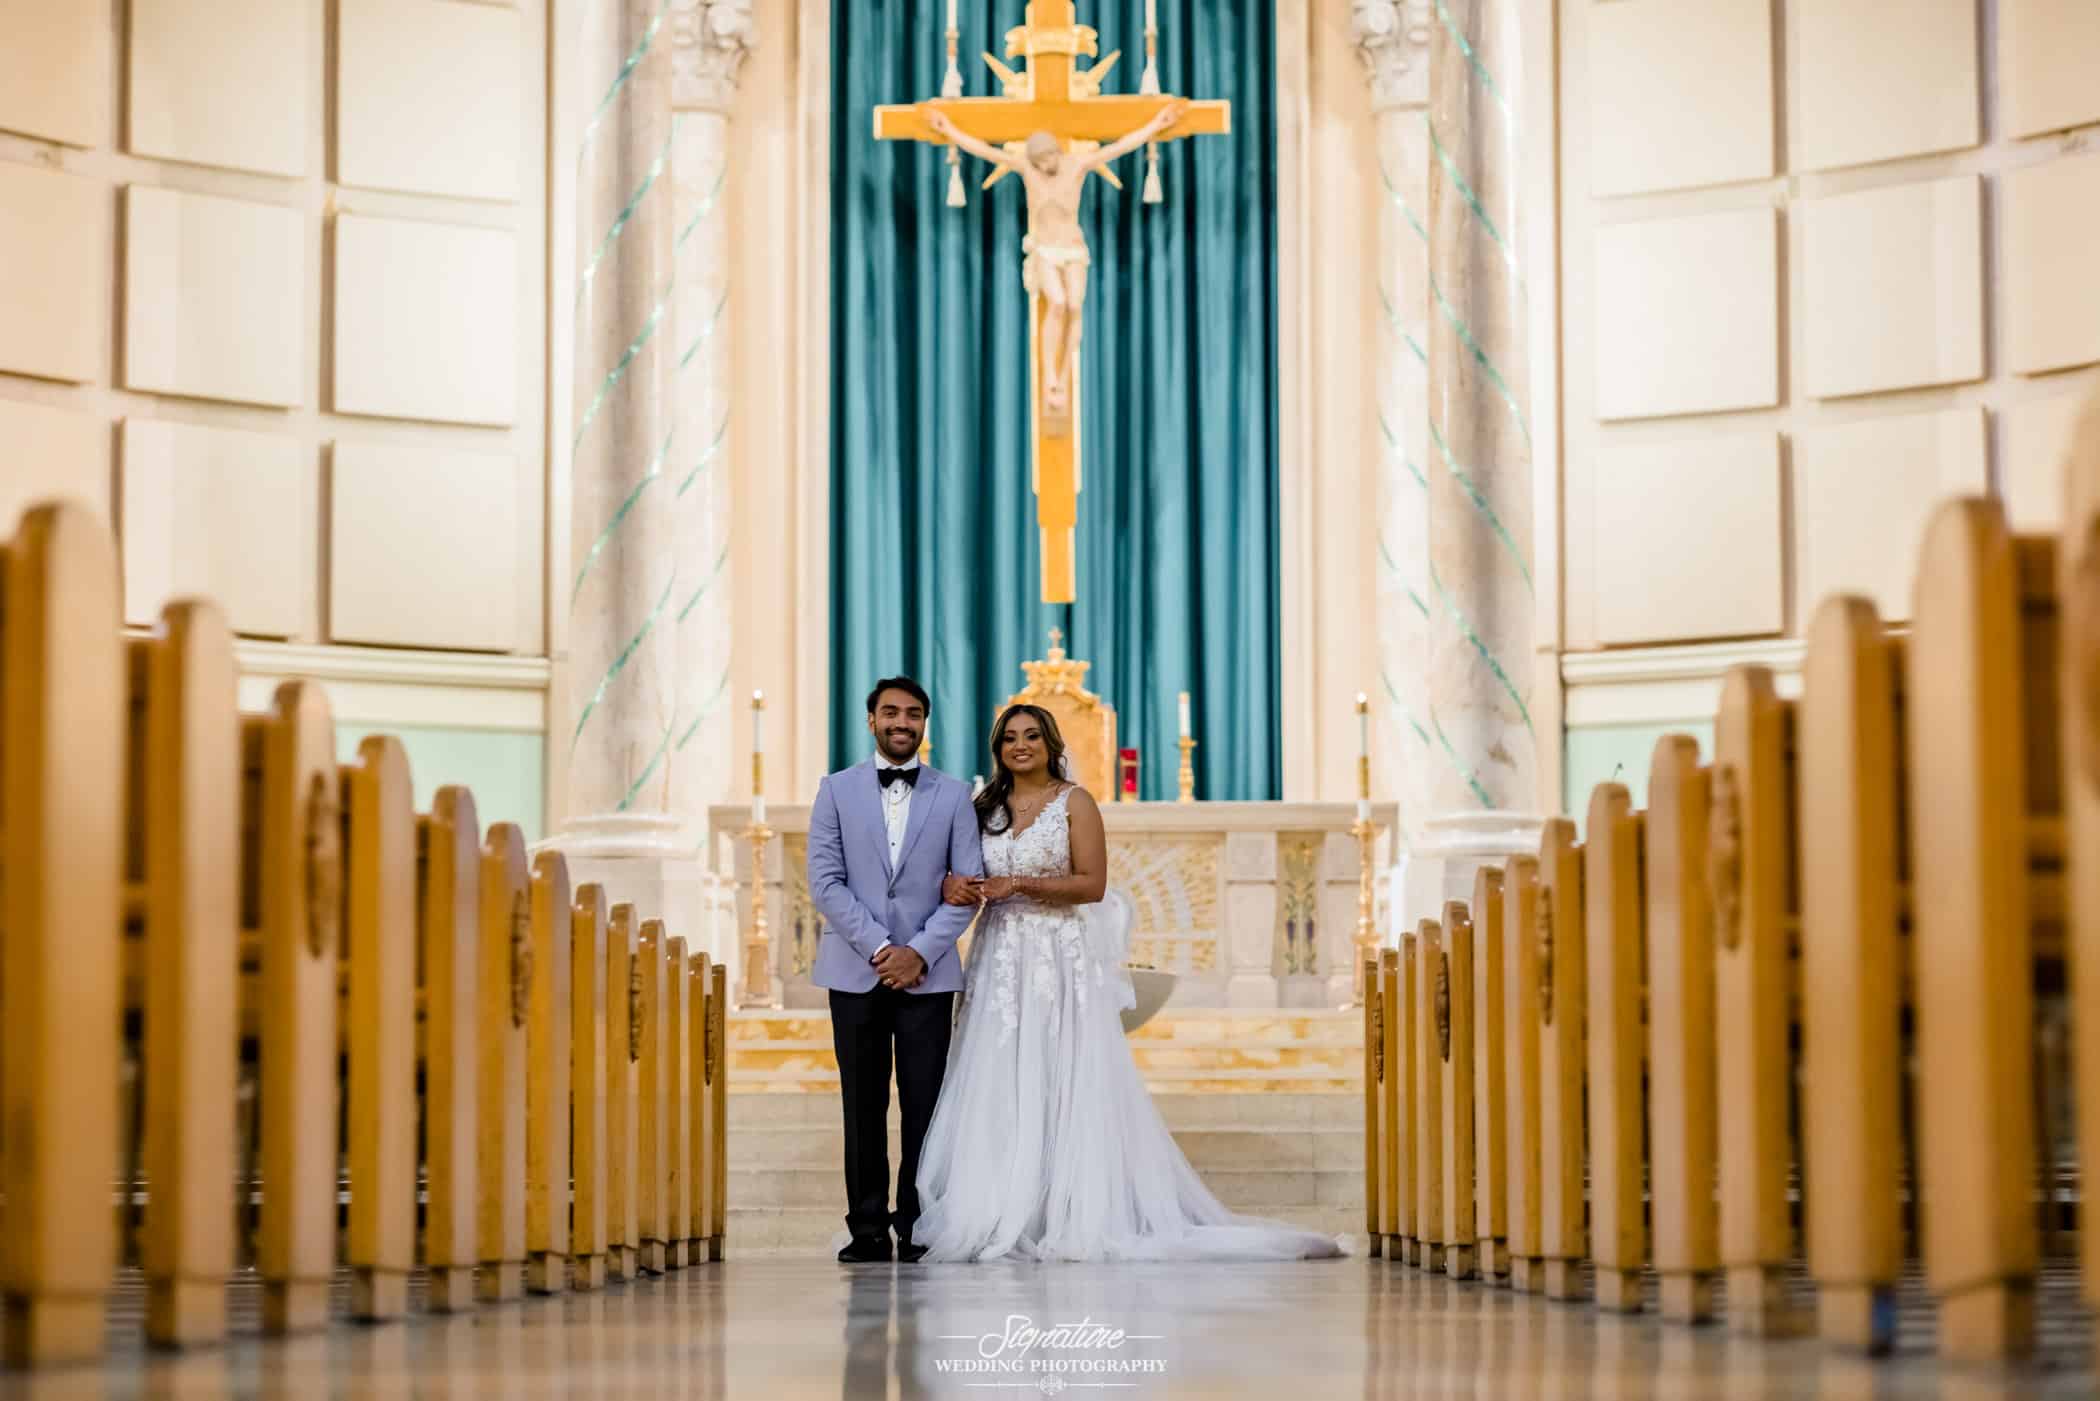 Bride and groom inside church